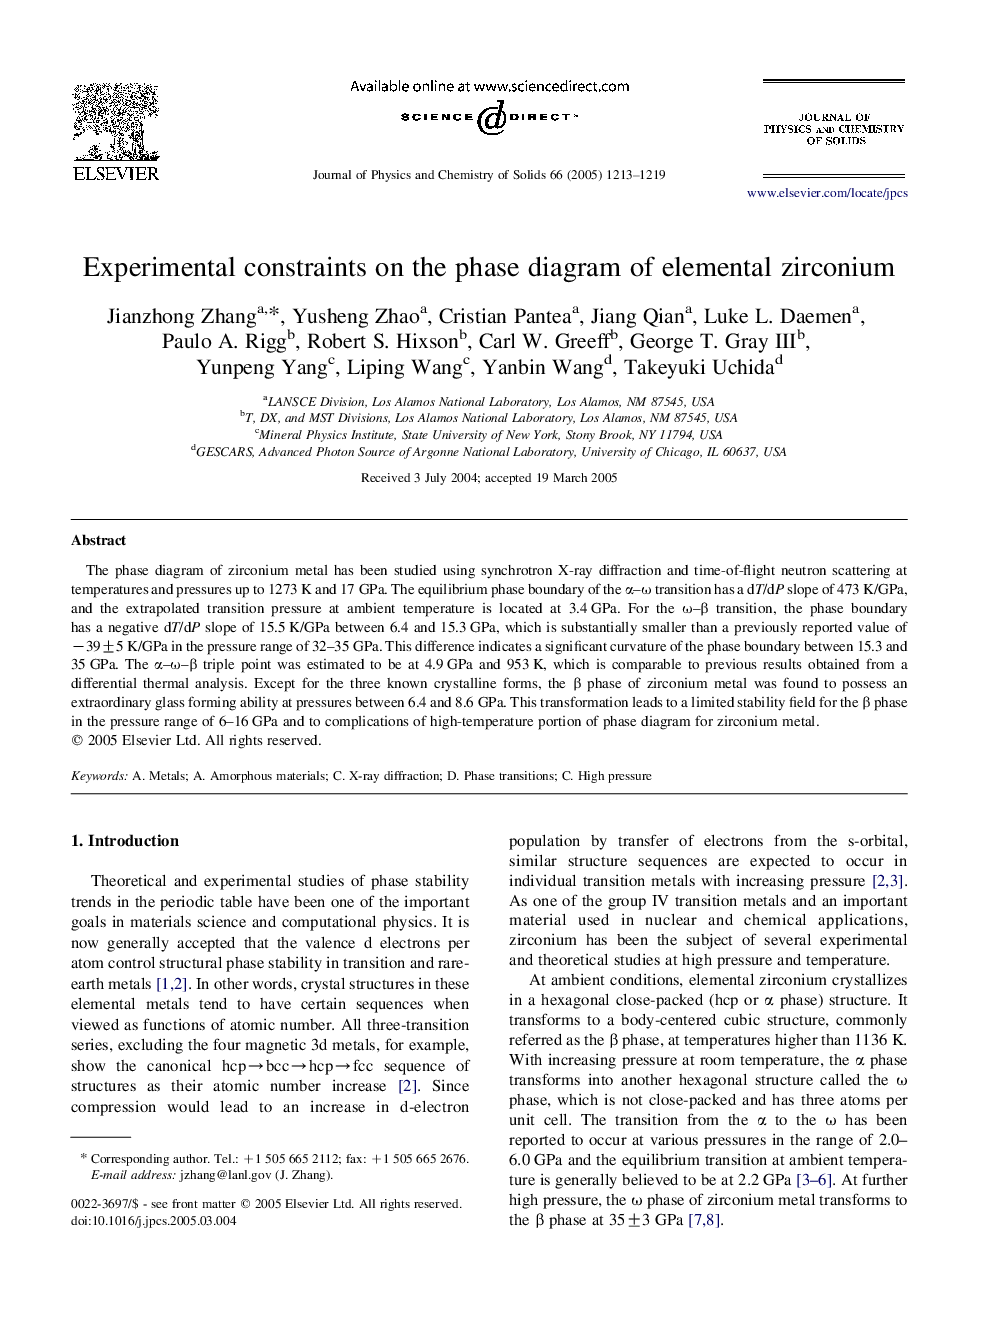 Experimental constraints on the phase diagram of elemental zirconium